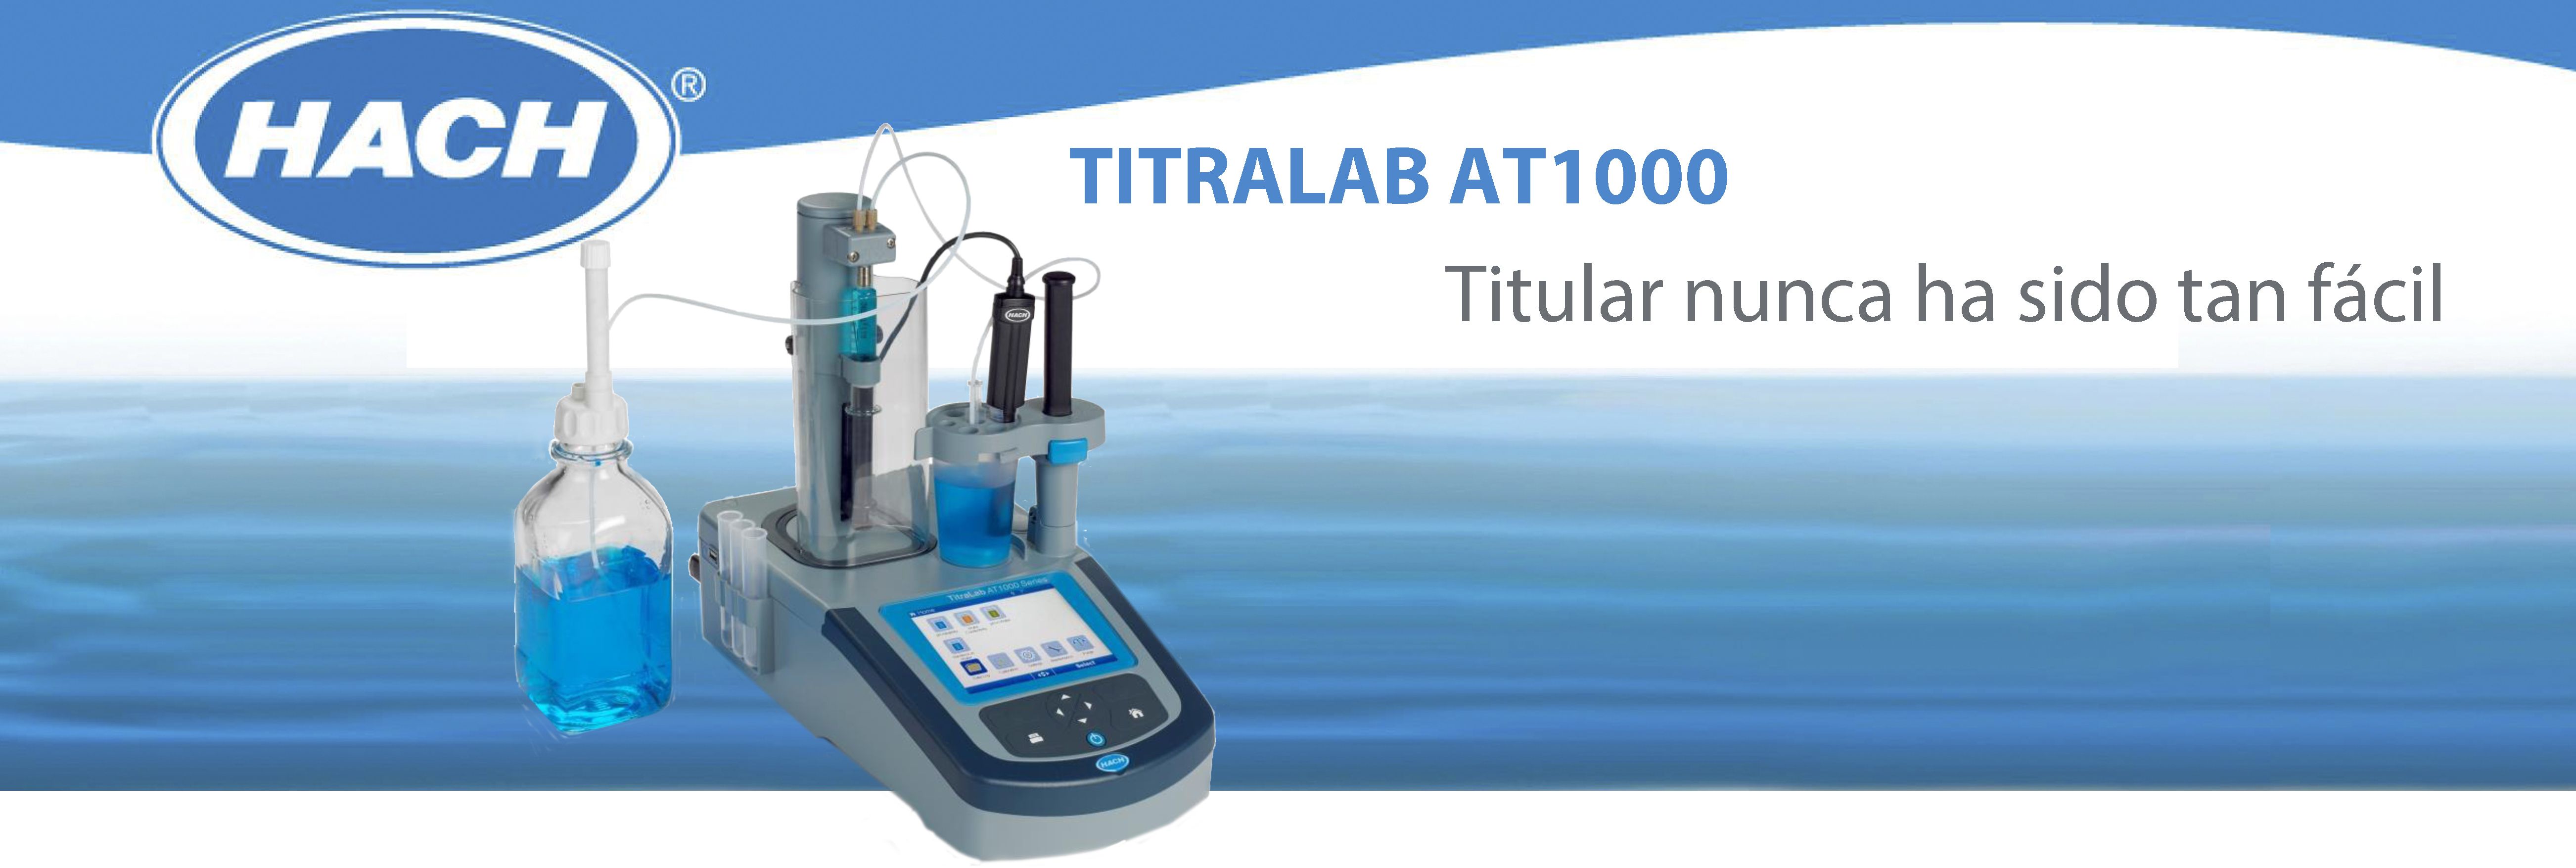 Titralab 1000: Titular nunca ha sido tan fácil